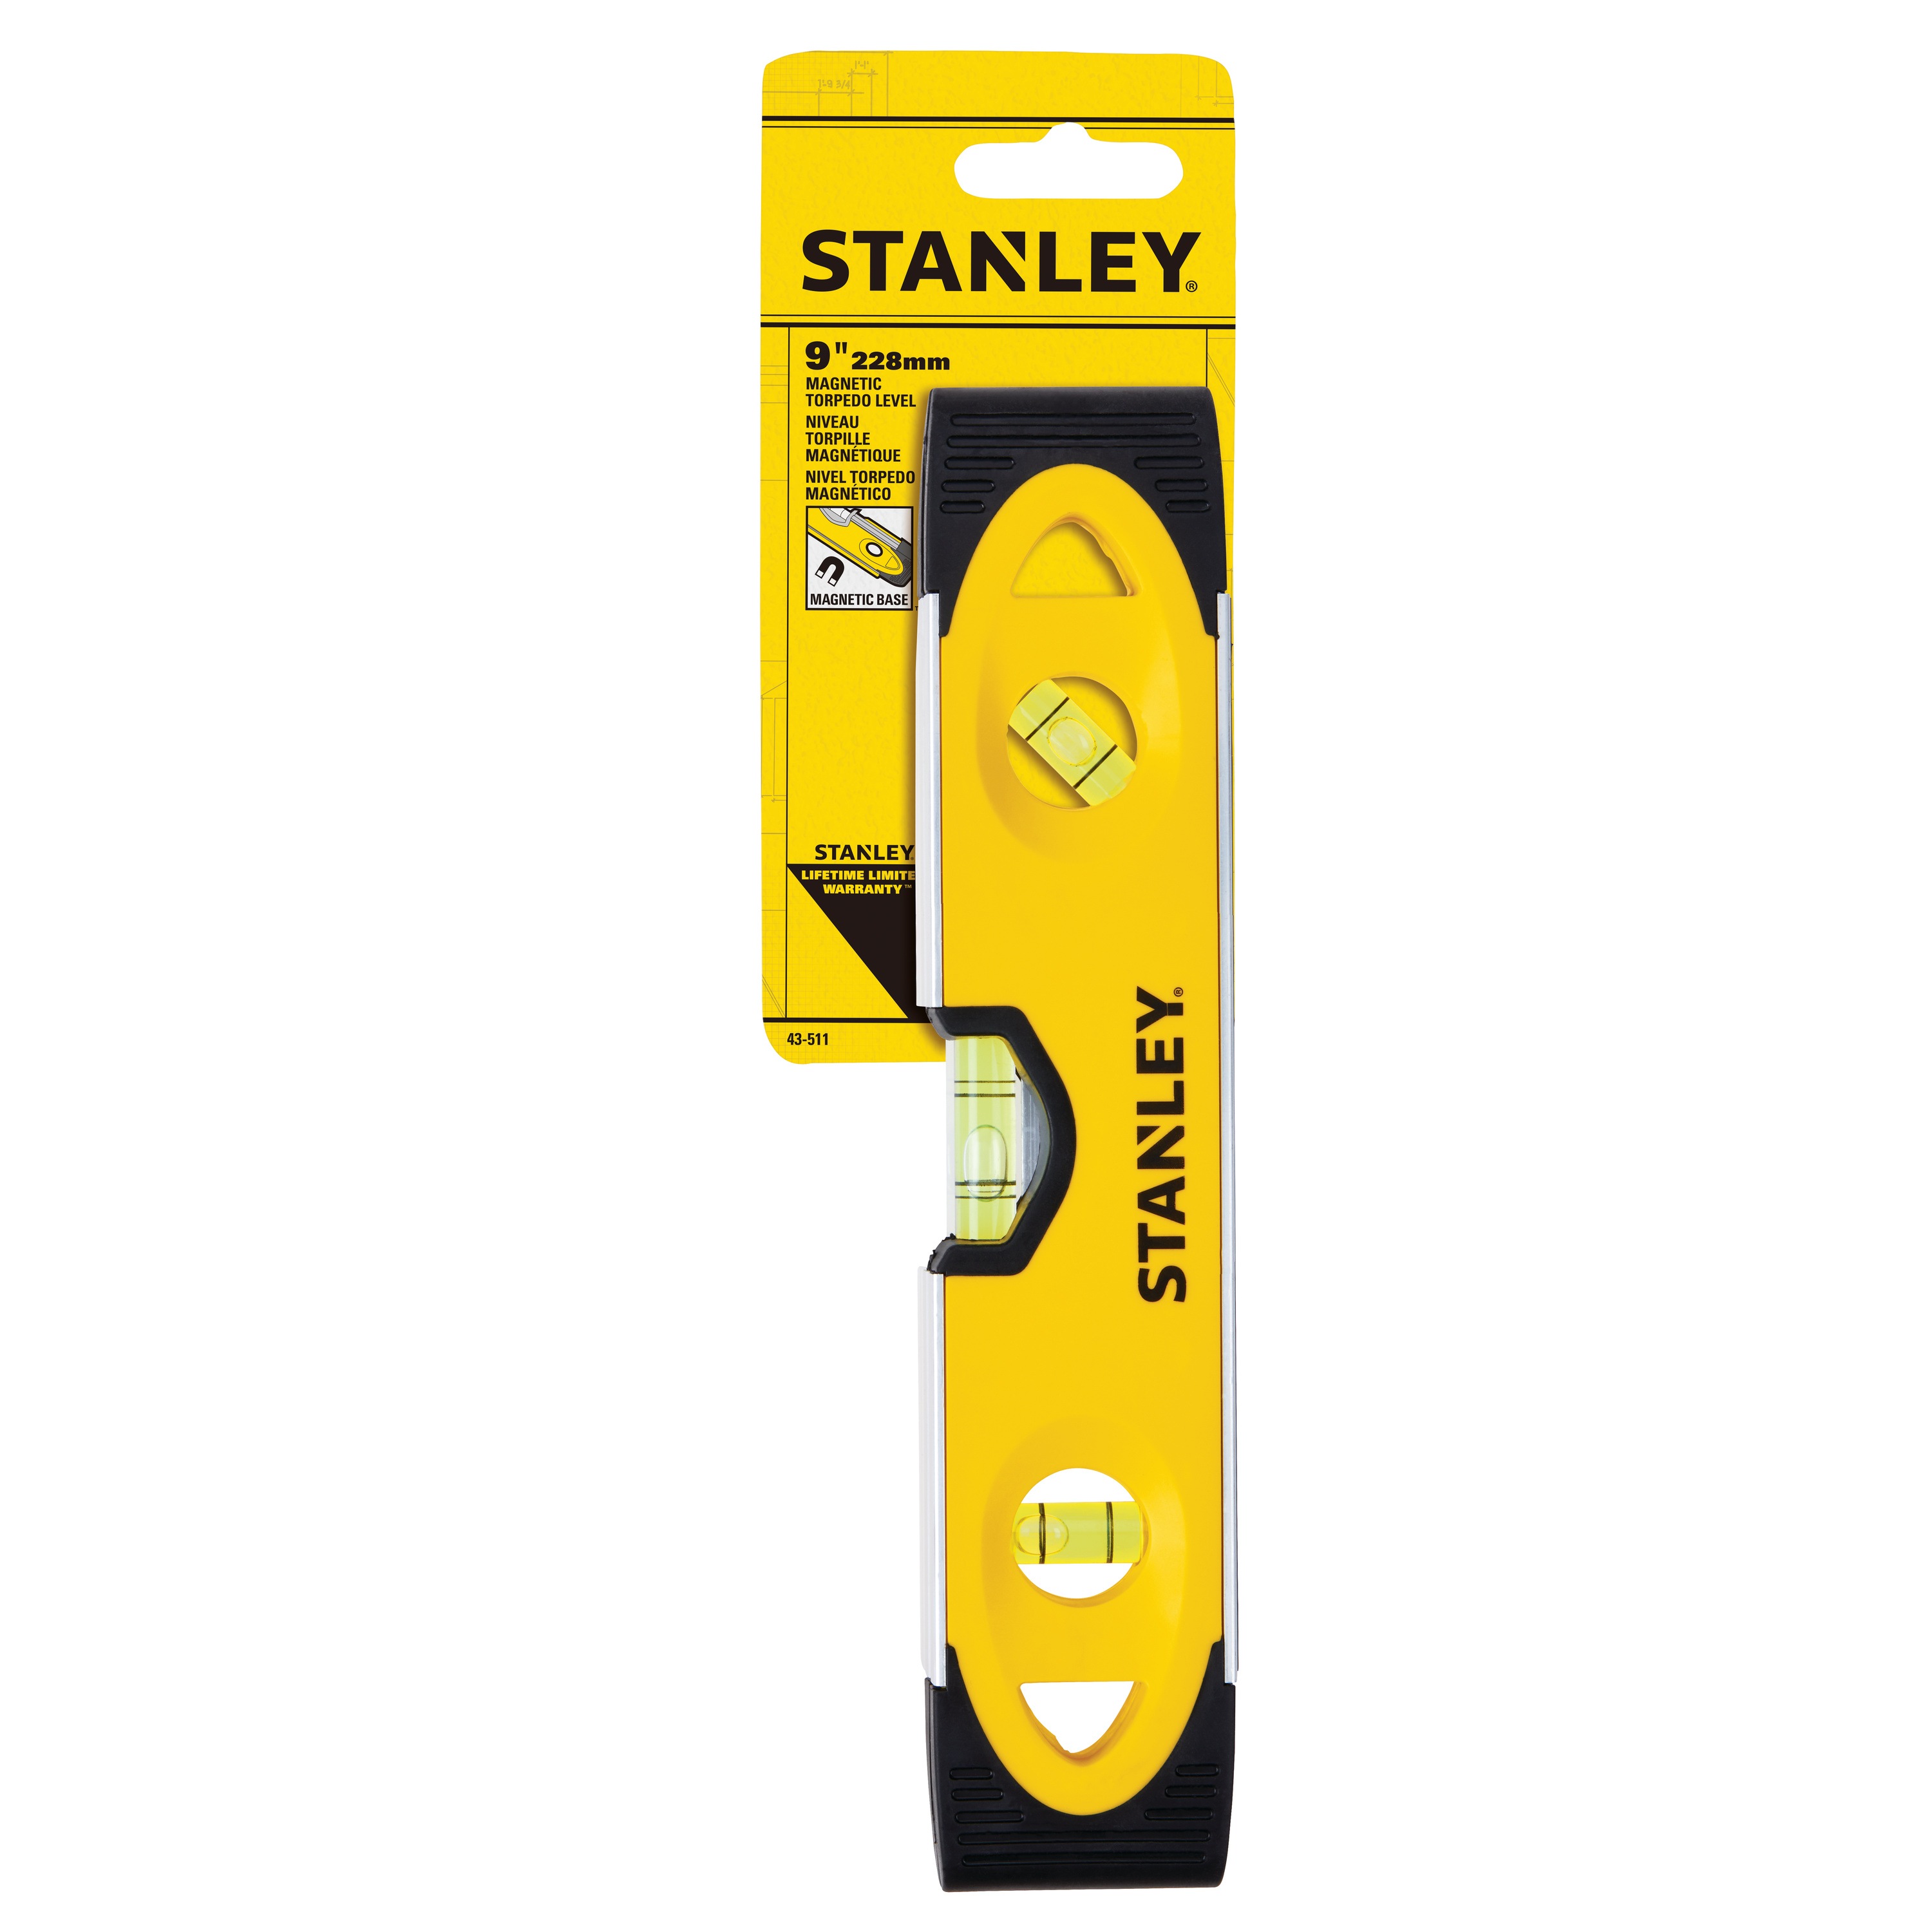 Stanley Tools - 9 in Magnetic Shock Resistant Torpedo Level - 43-511